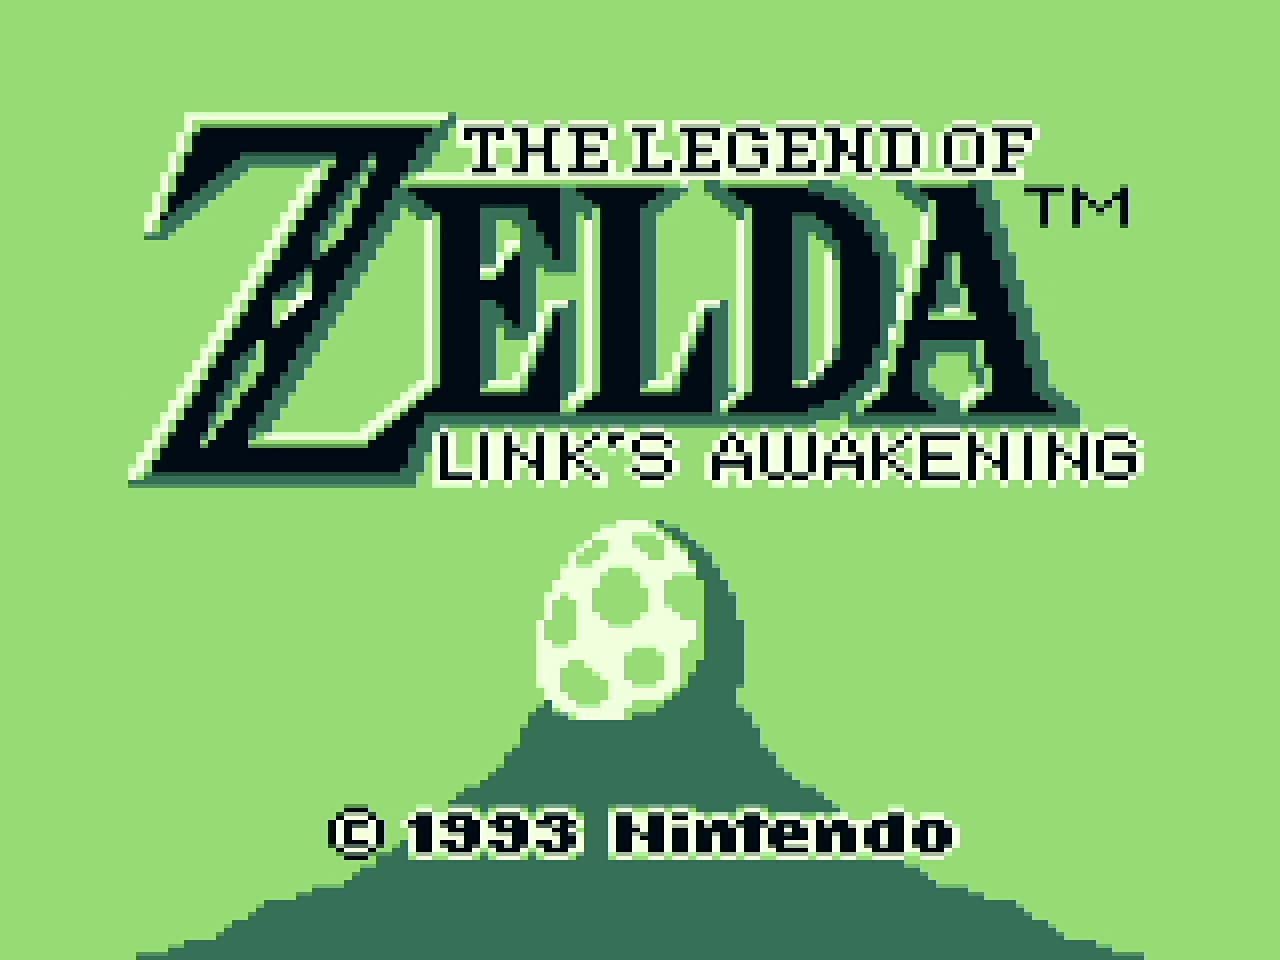 Console Nintendo Game & Watch The Legend of Zelda